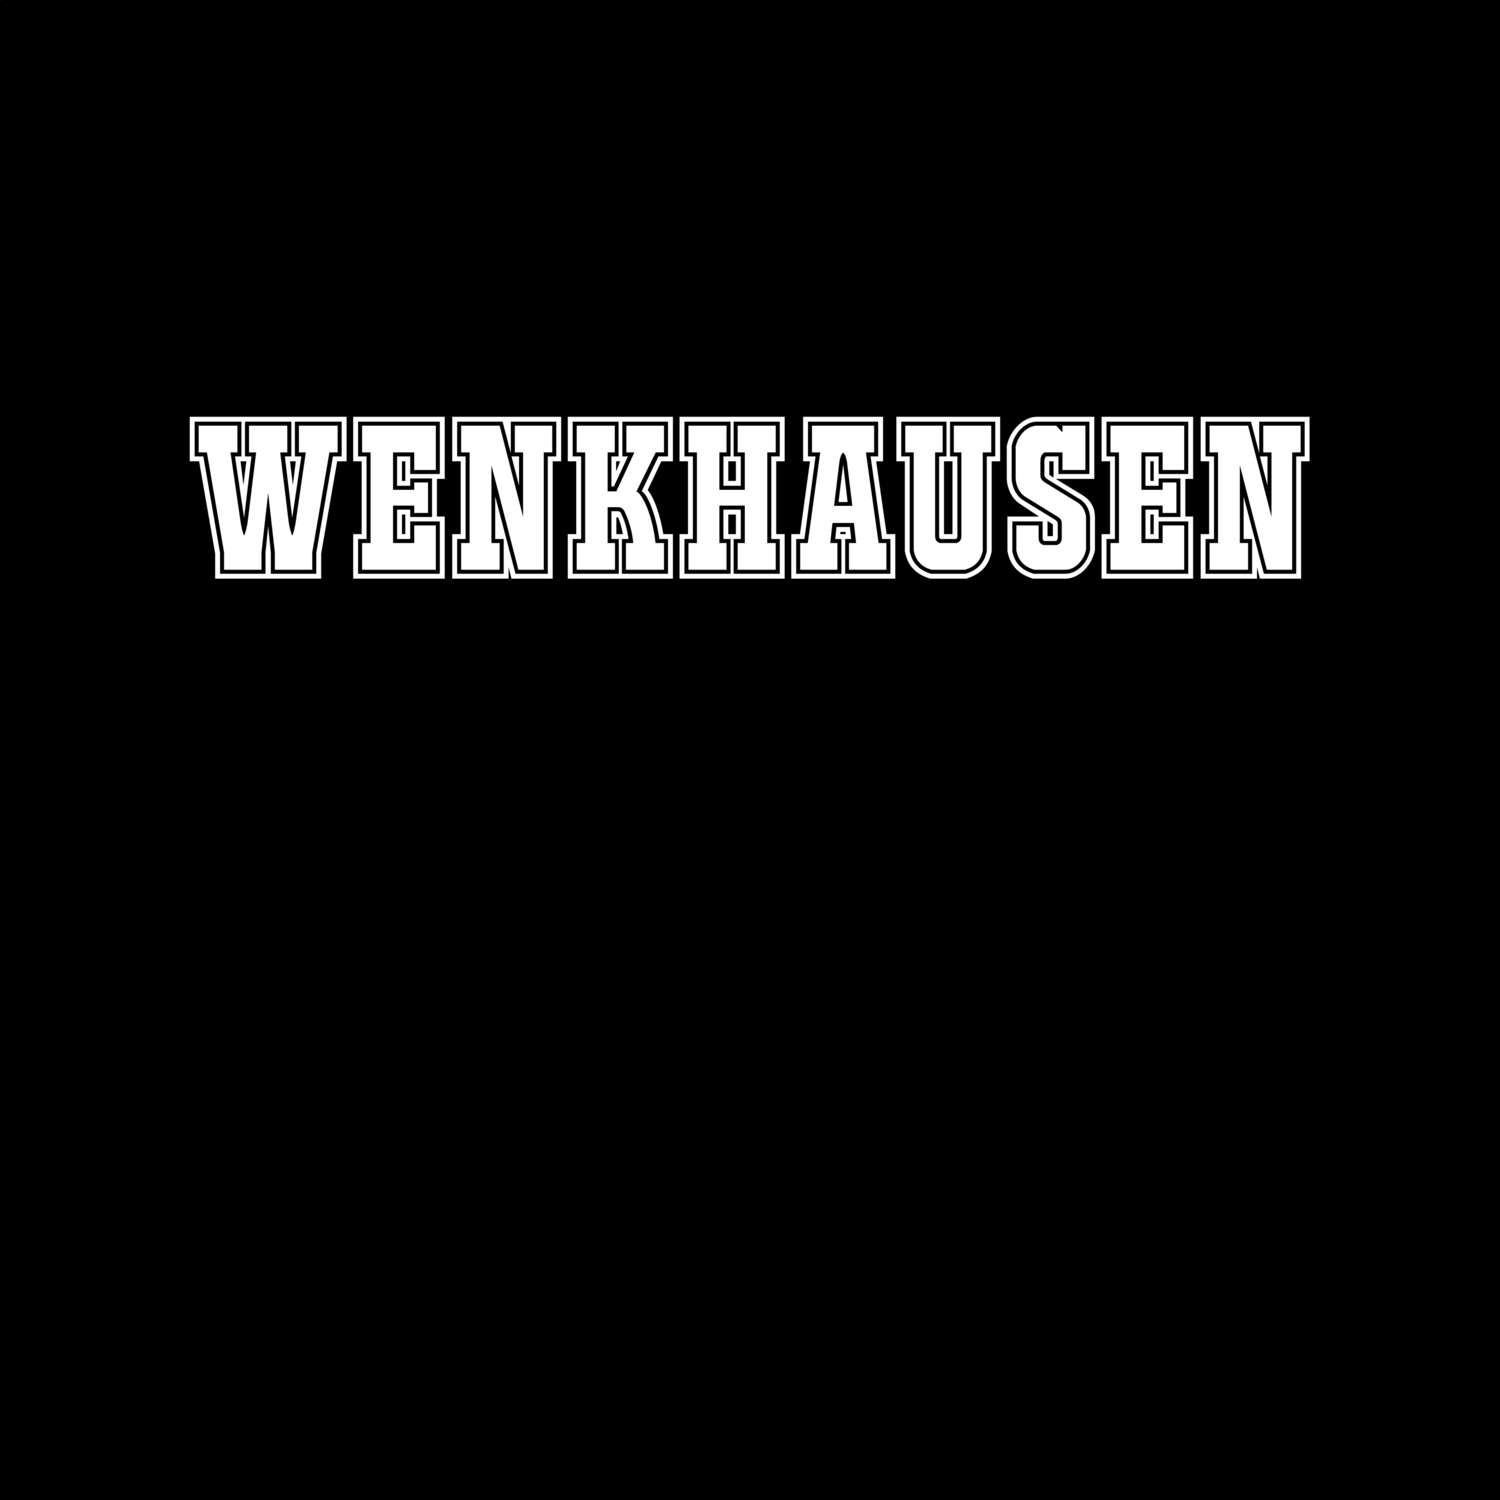 Wenkhausen T-Shirt »Classic«